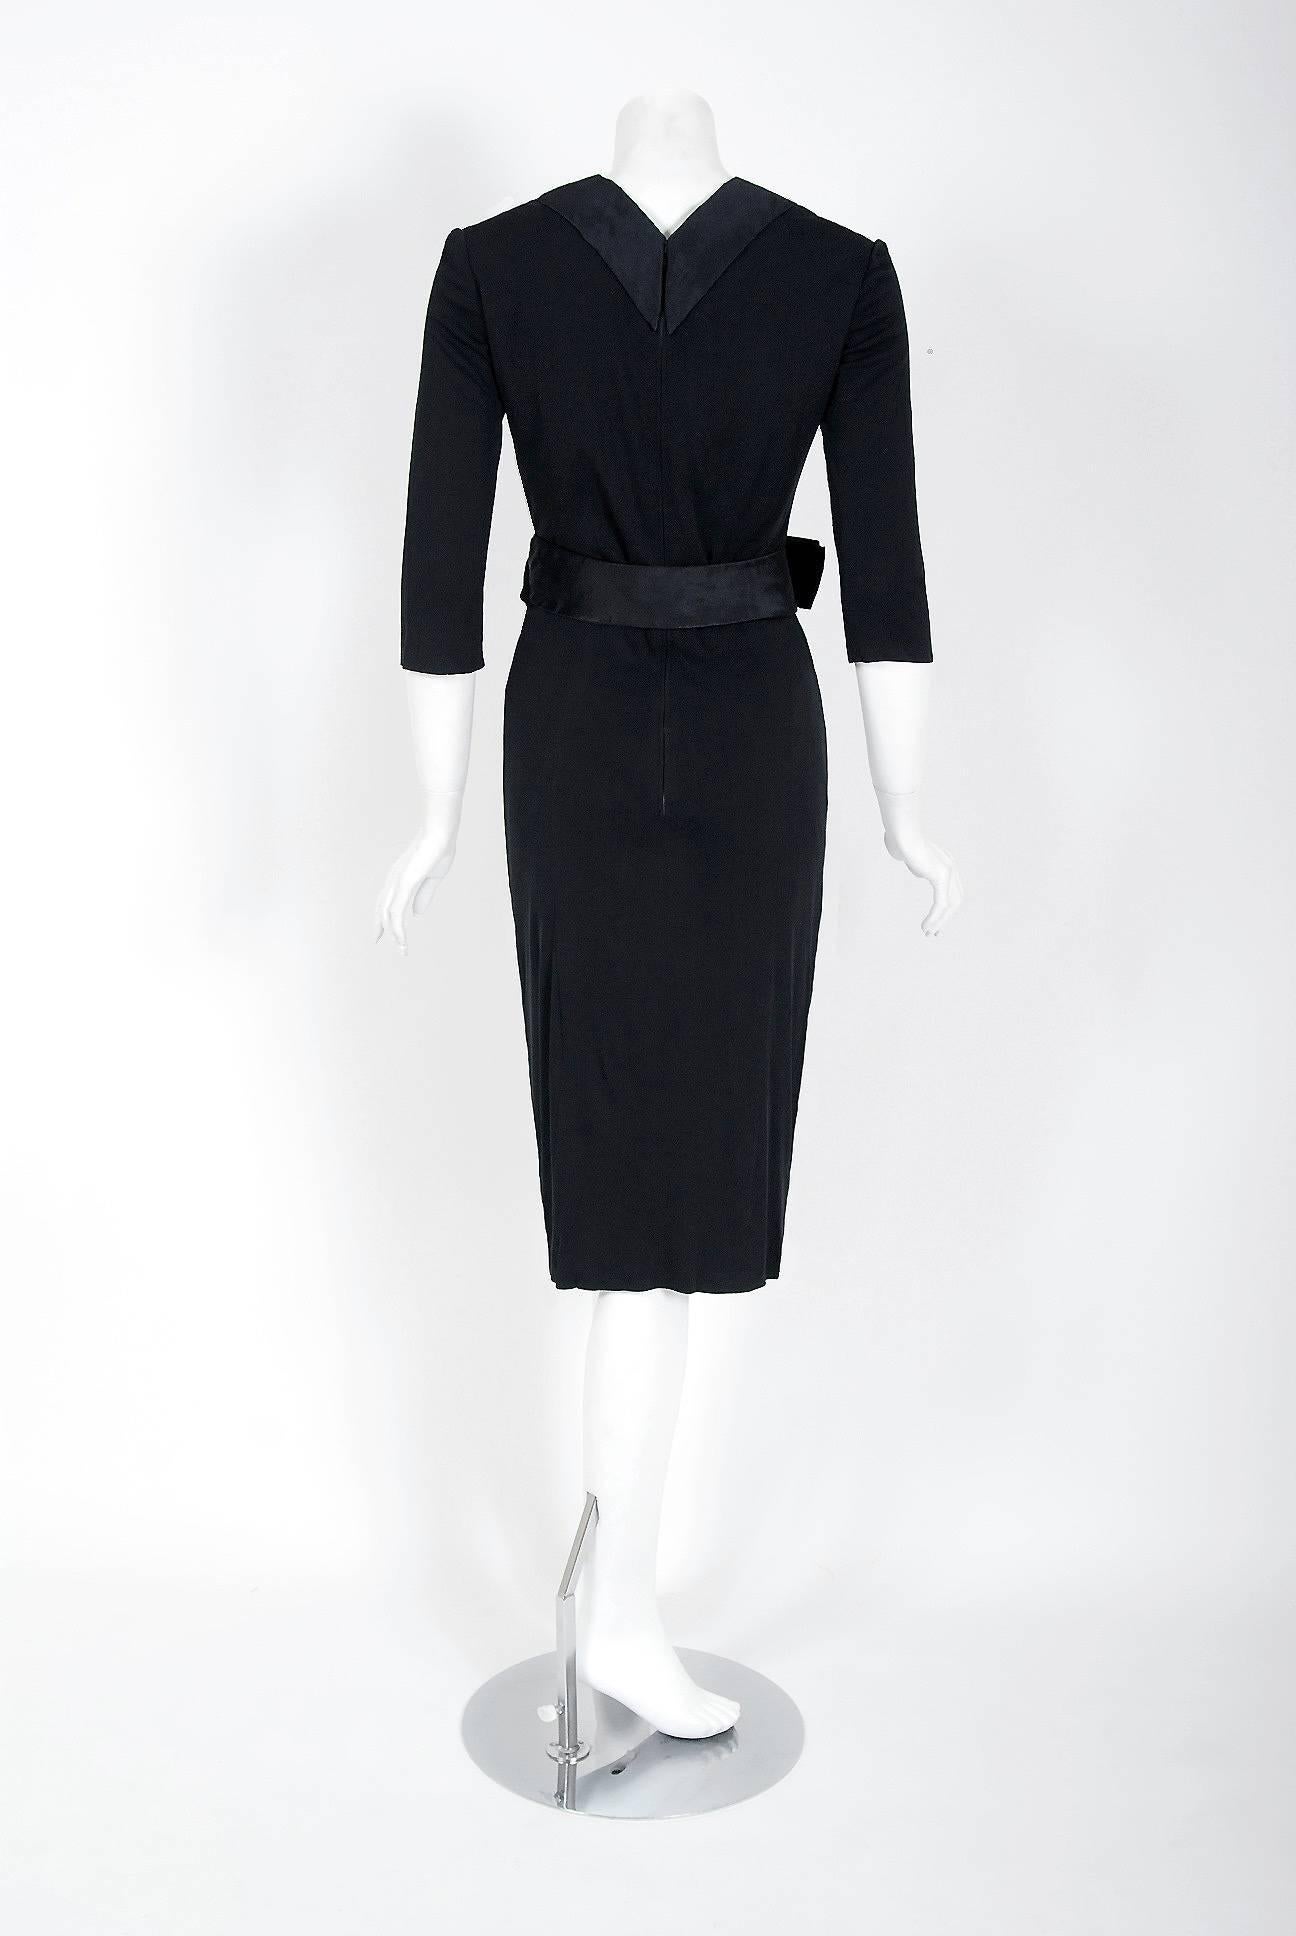 Women's 1959 Pierre Balmain Haute-Couture Black Sculpted Silk-Jersey Cocktail Dress  